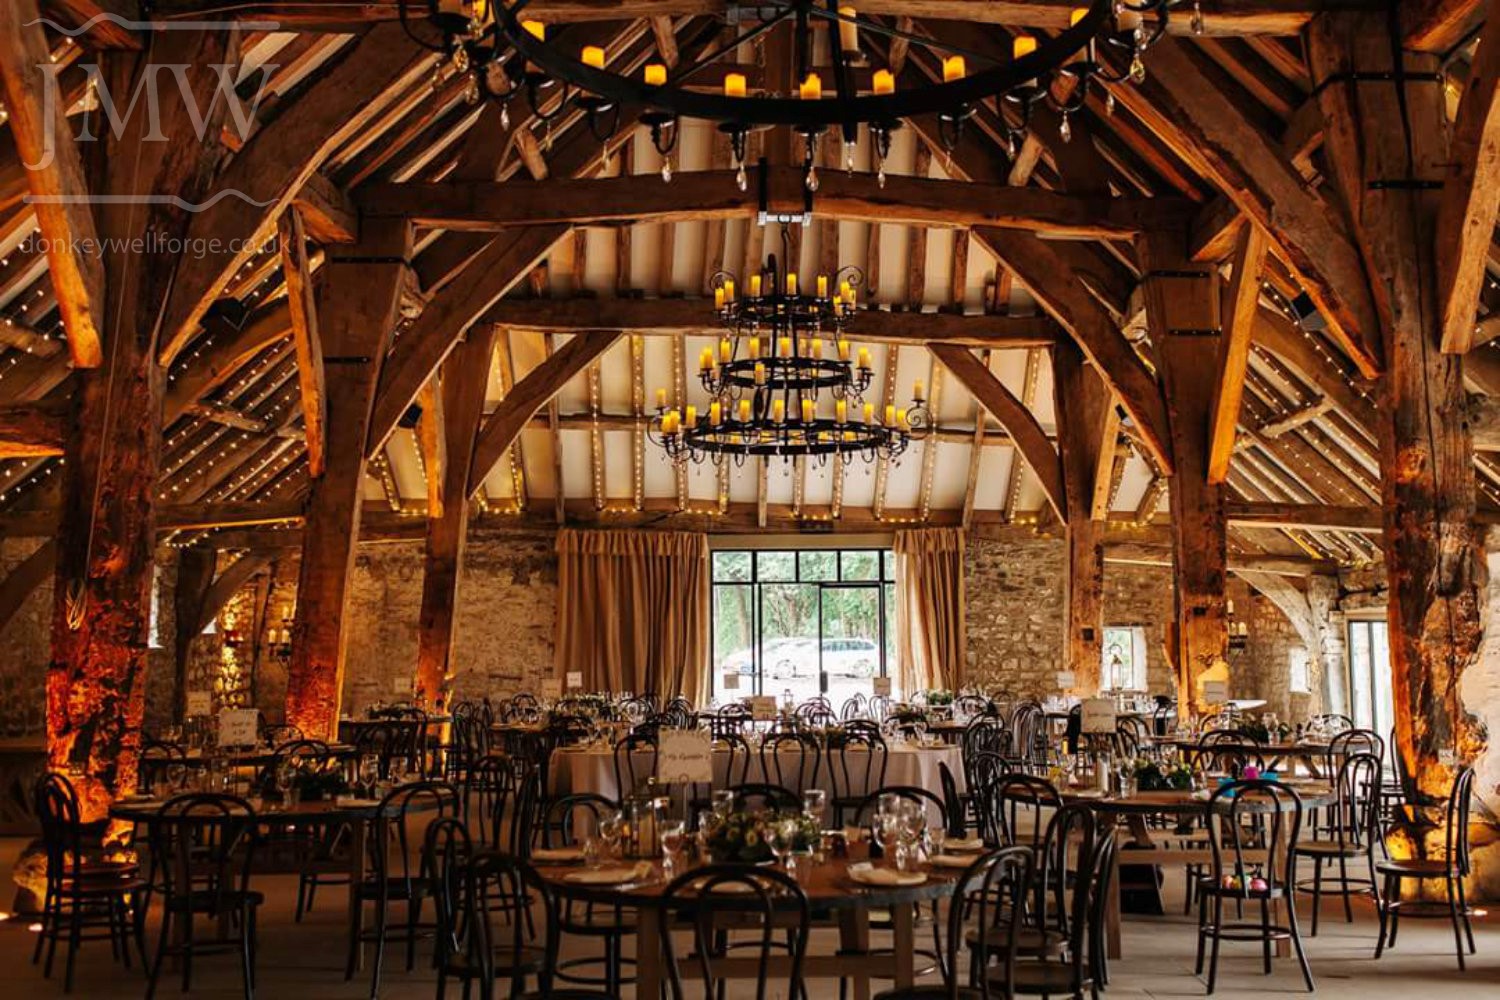 wrought-iron-chandelier-tithe-barn-wedding-venue-donkeywell-forge